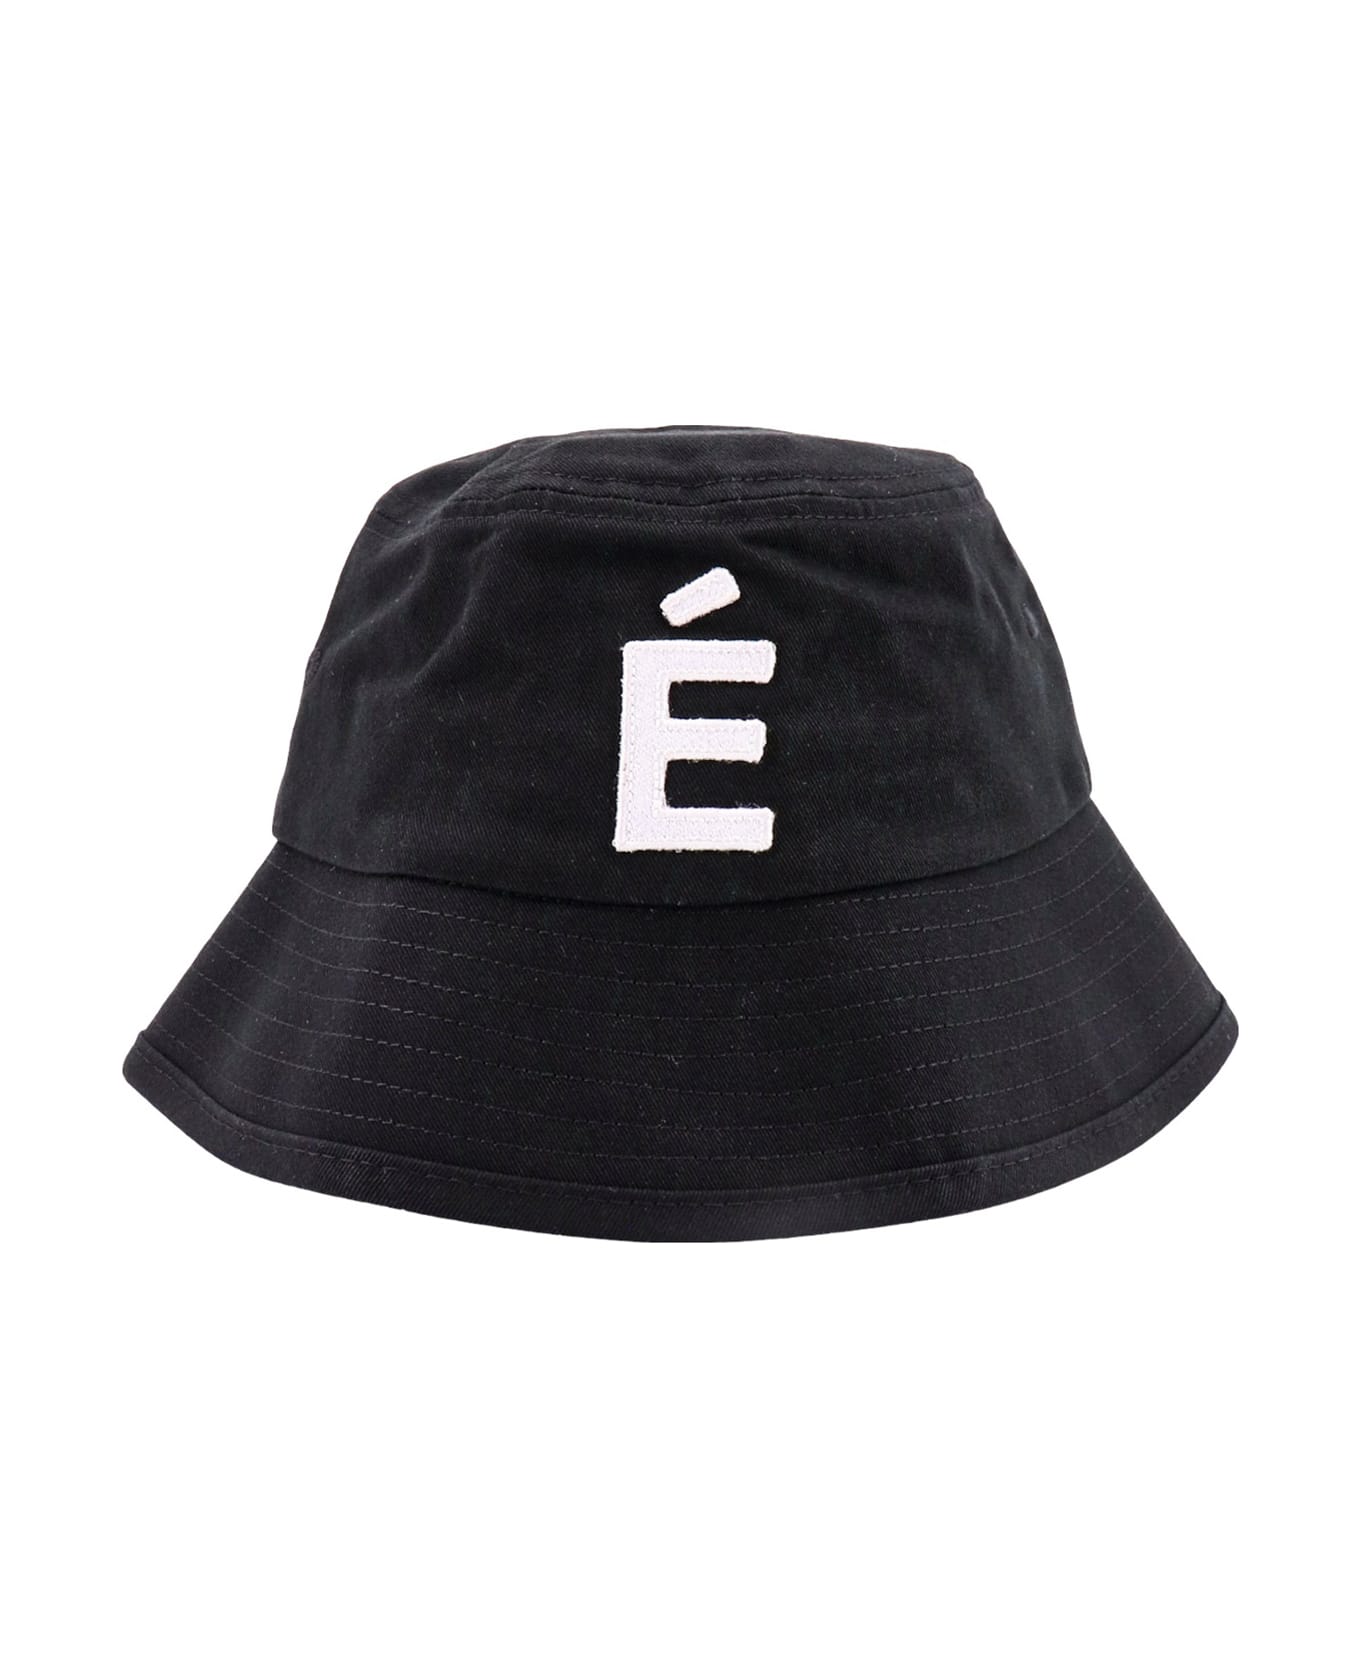 Études Cloche - Black 帽子